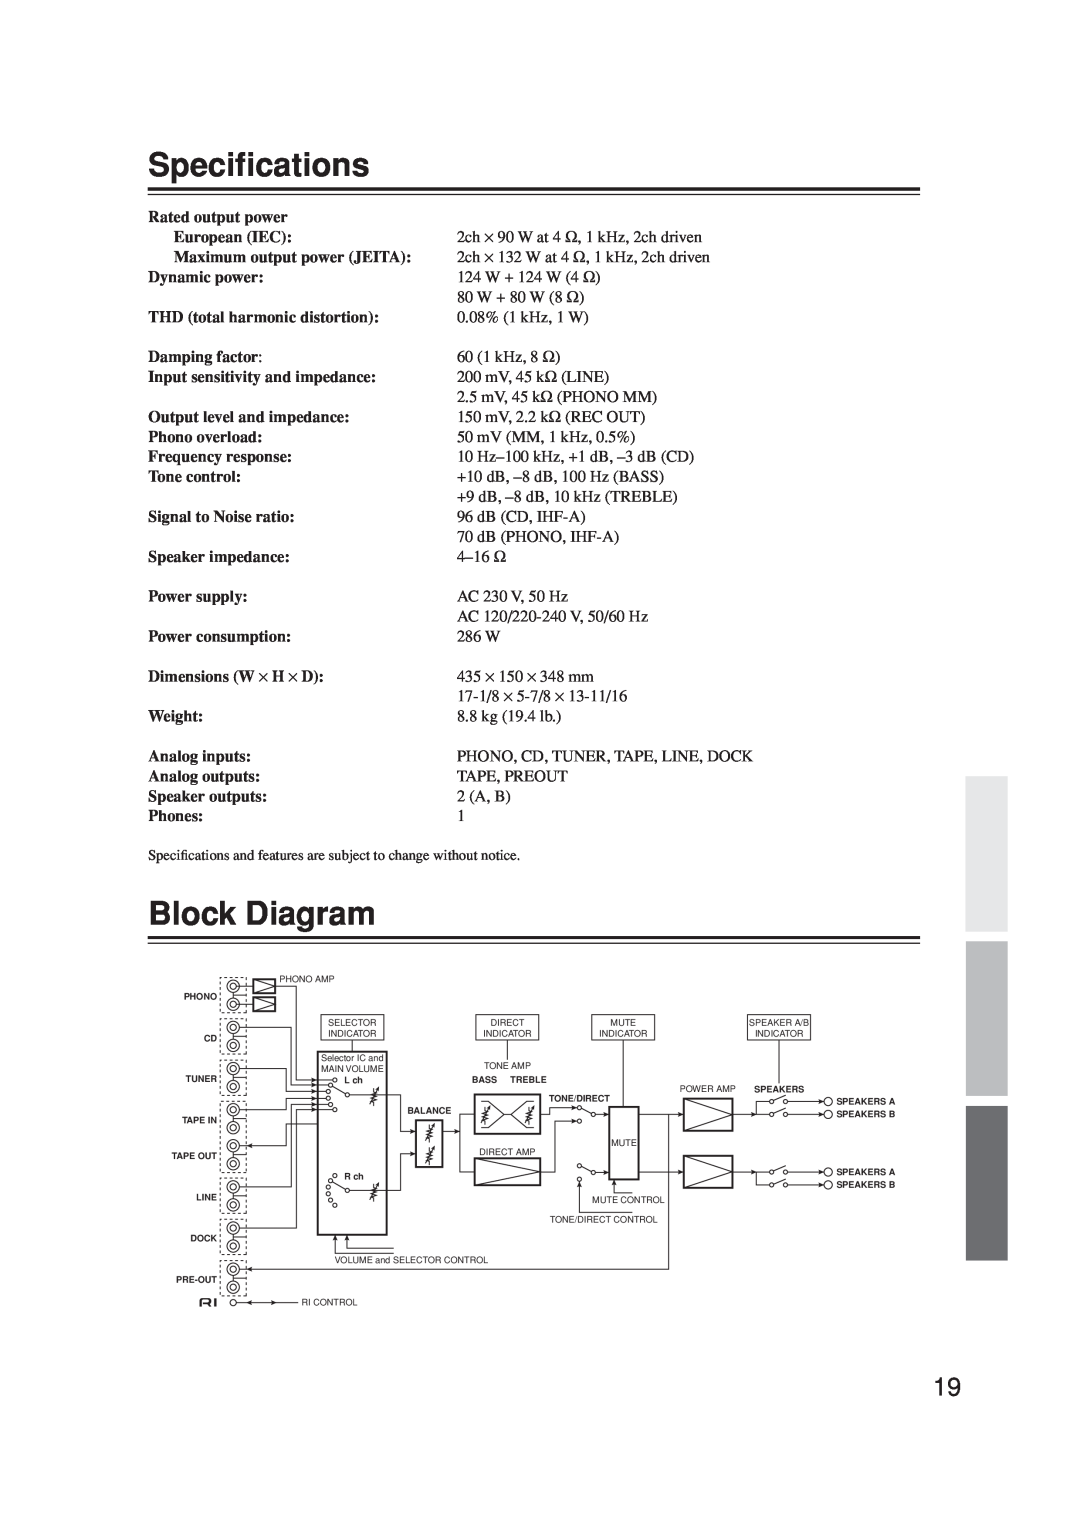 Onkyo A-9377 Speciﬁcations, Block Diagram, Rated output power, European IEC, Maximum output power JEITA, Dynamic power 